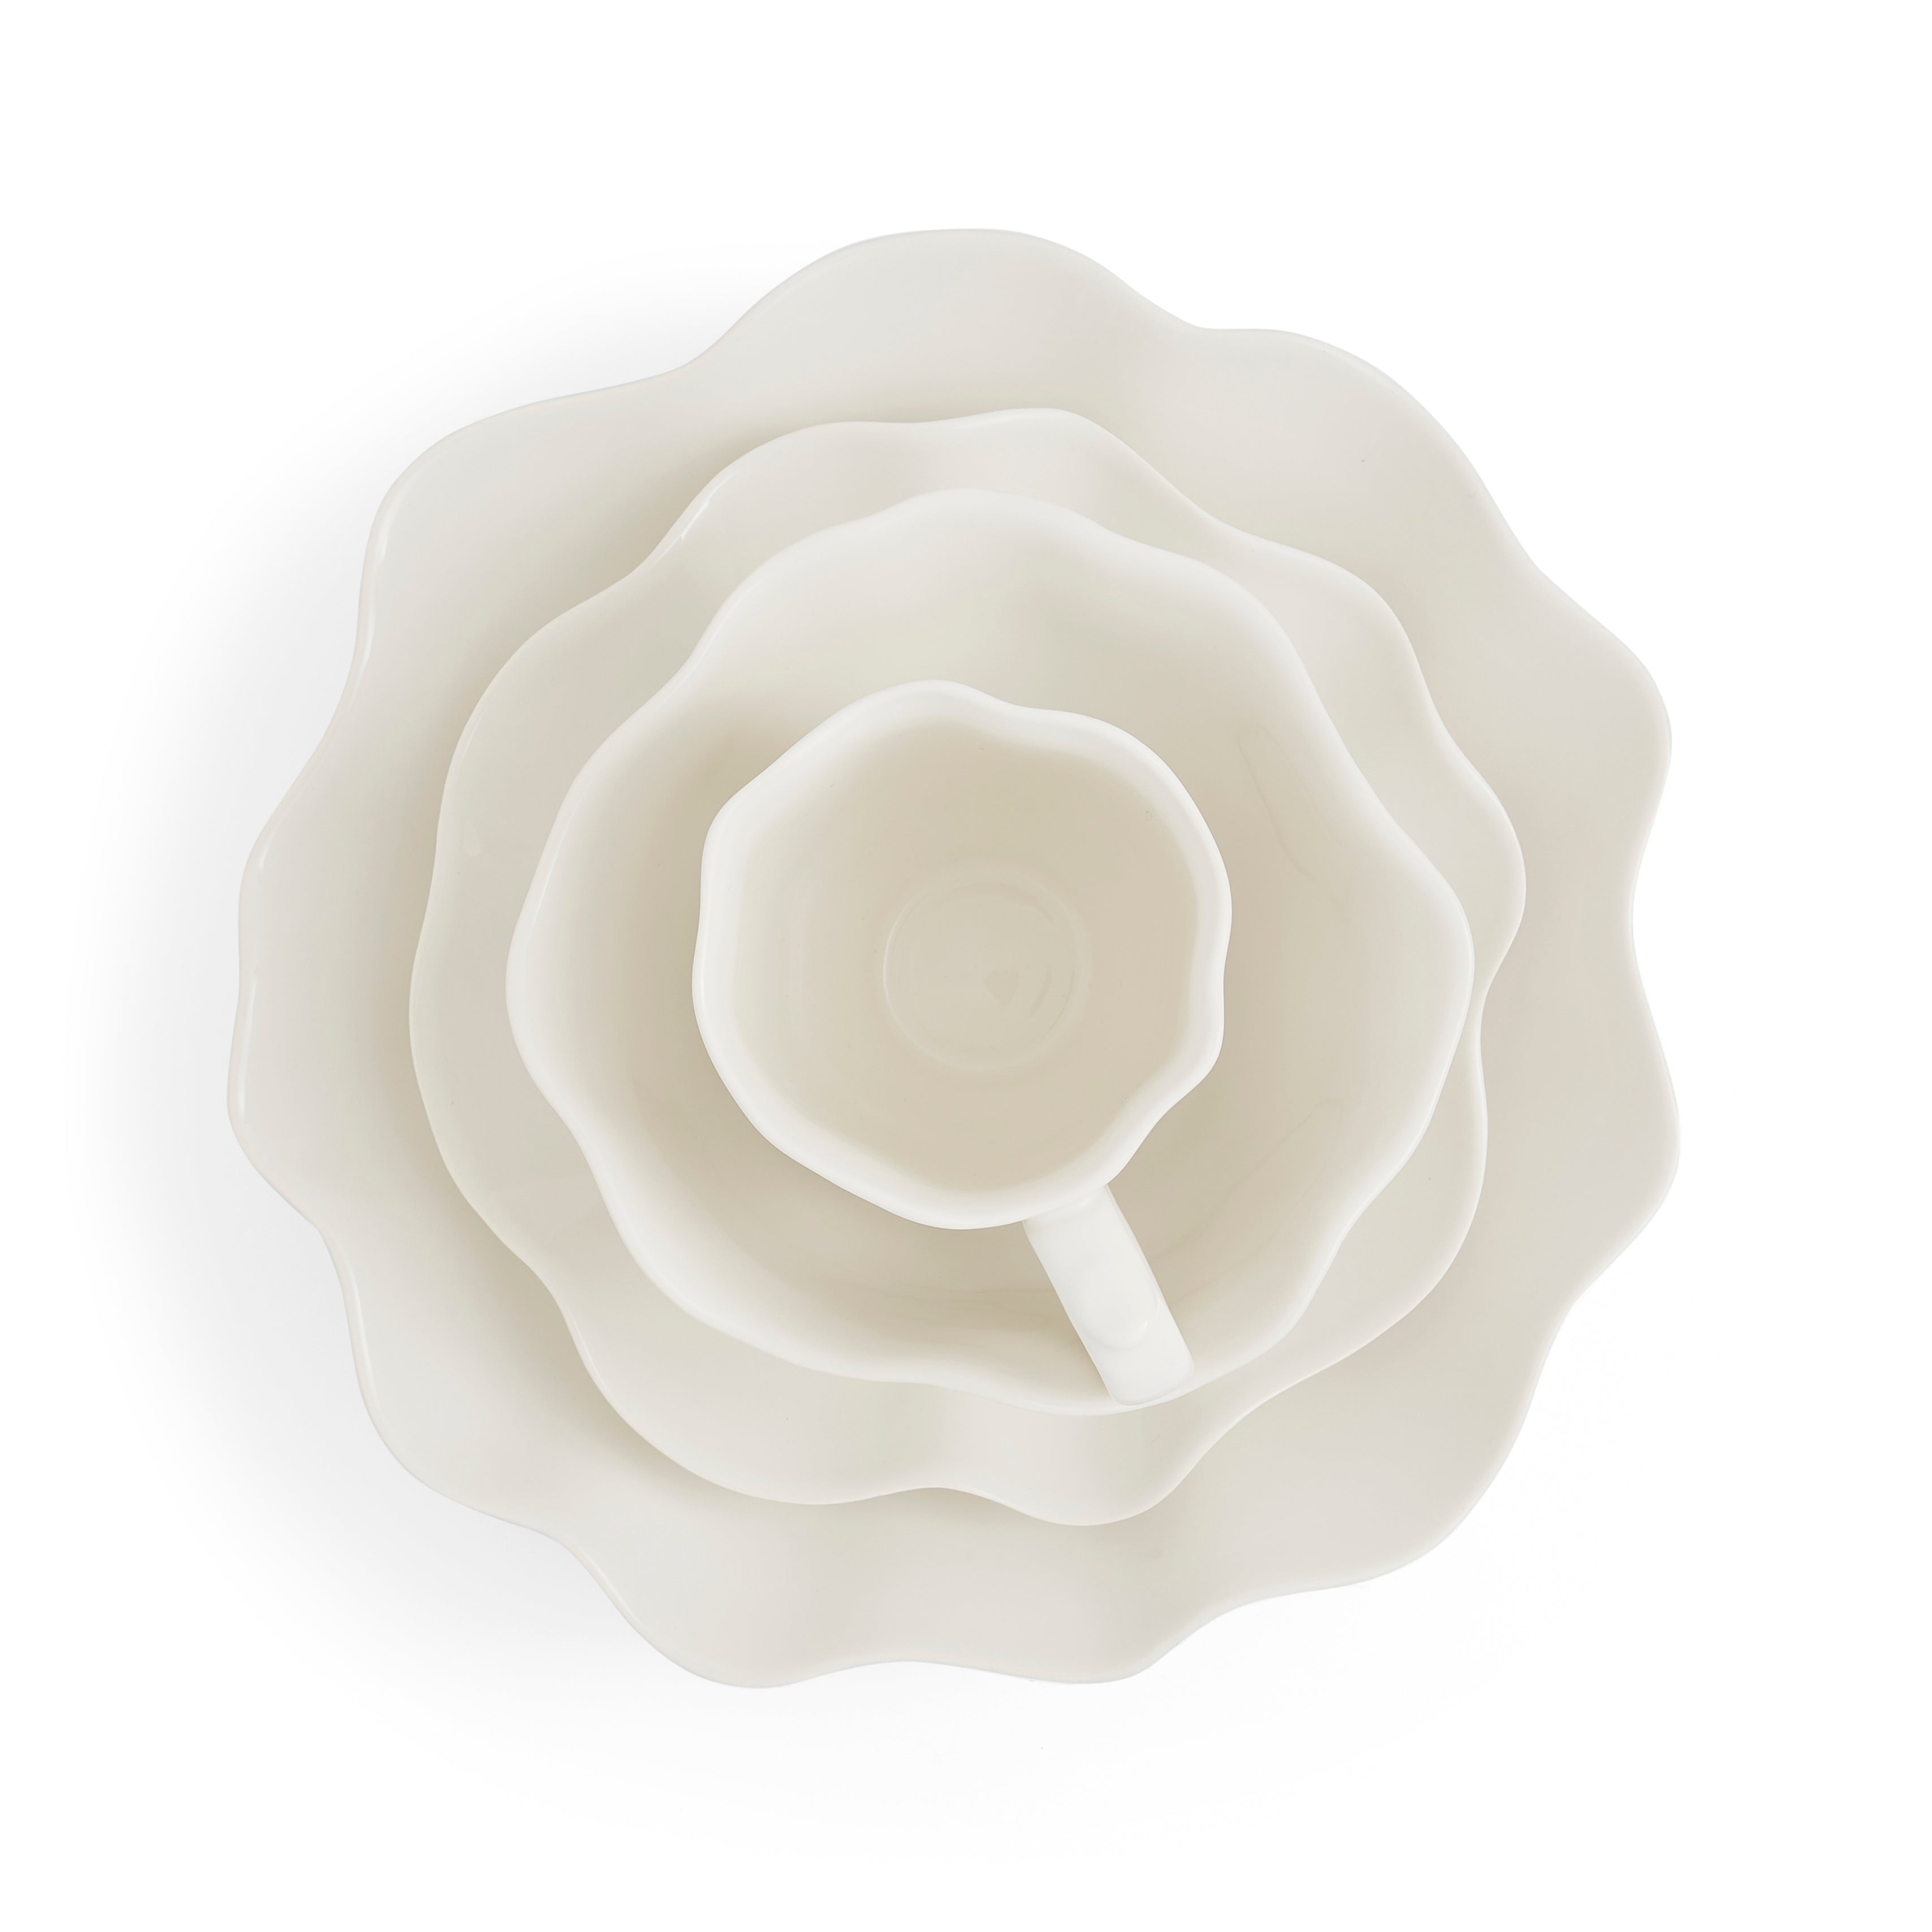 Sophie Conran Floret 4 Piece Place Setting- Creamy White